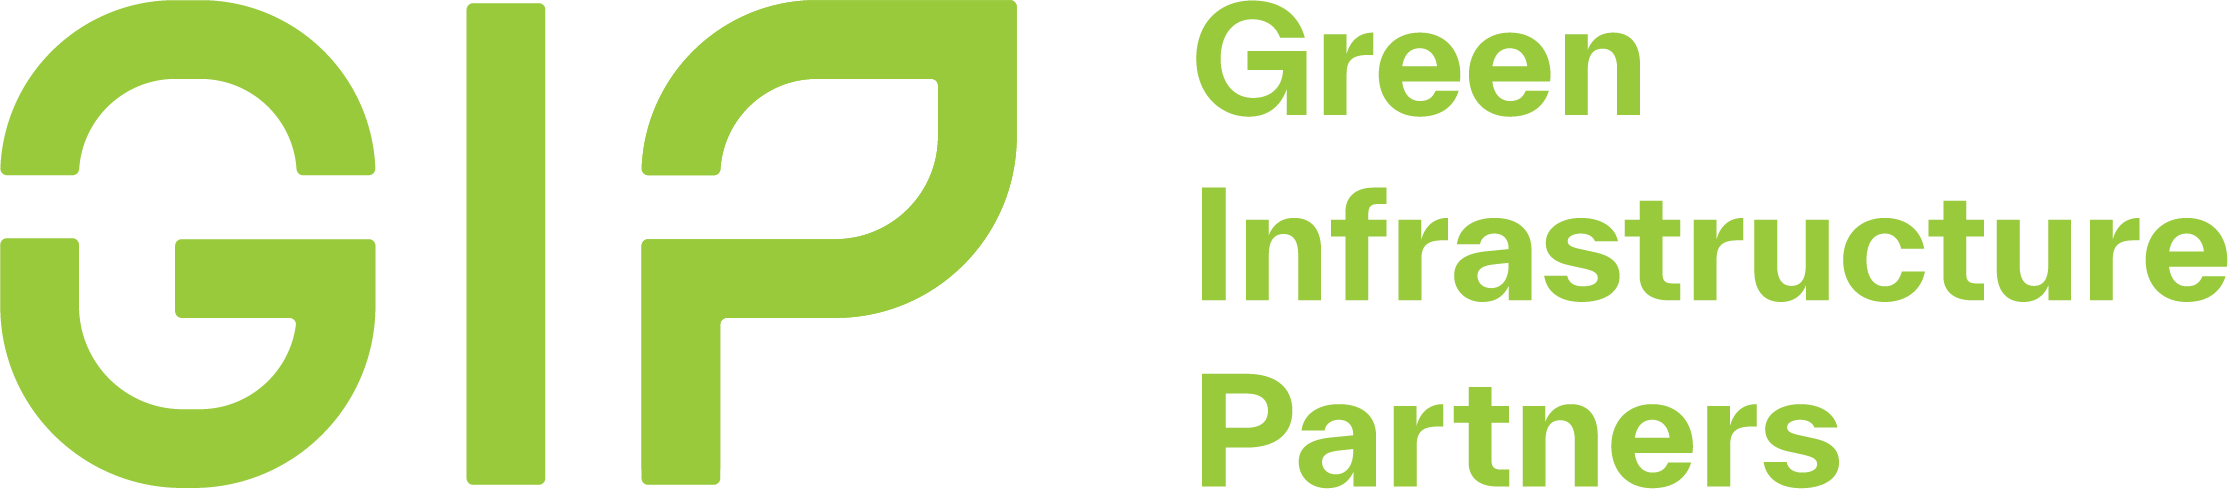 Green Infrastructure Partner